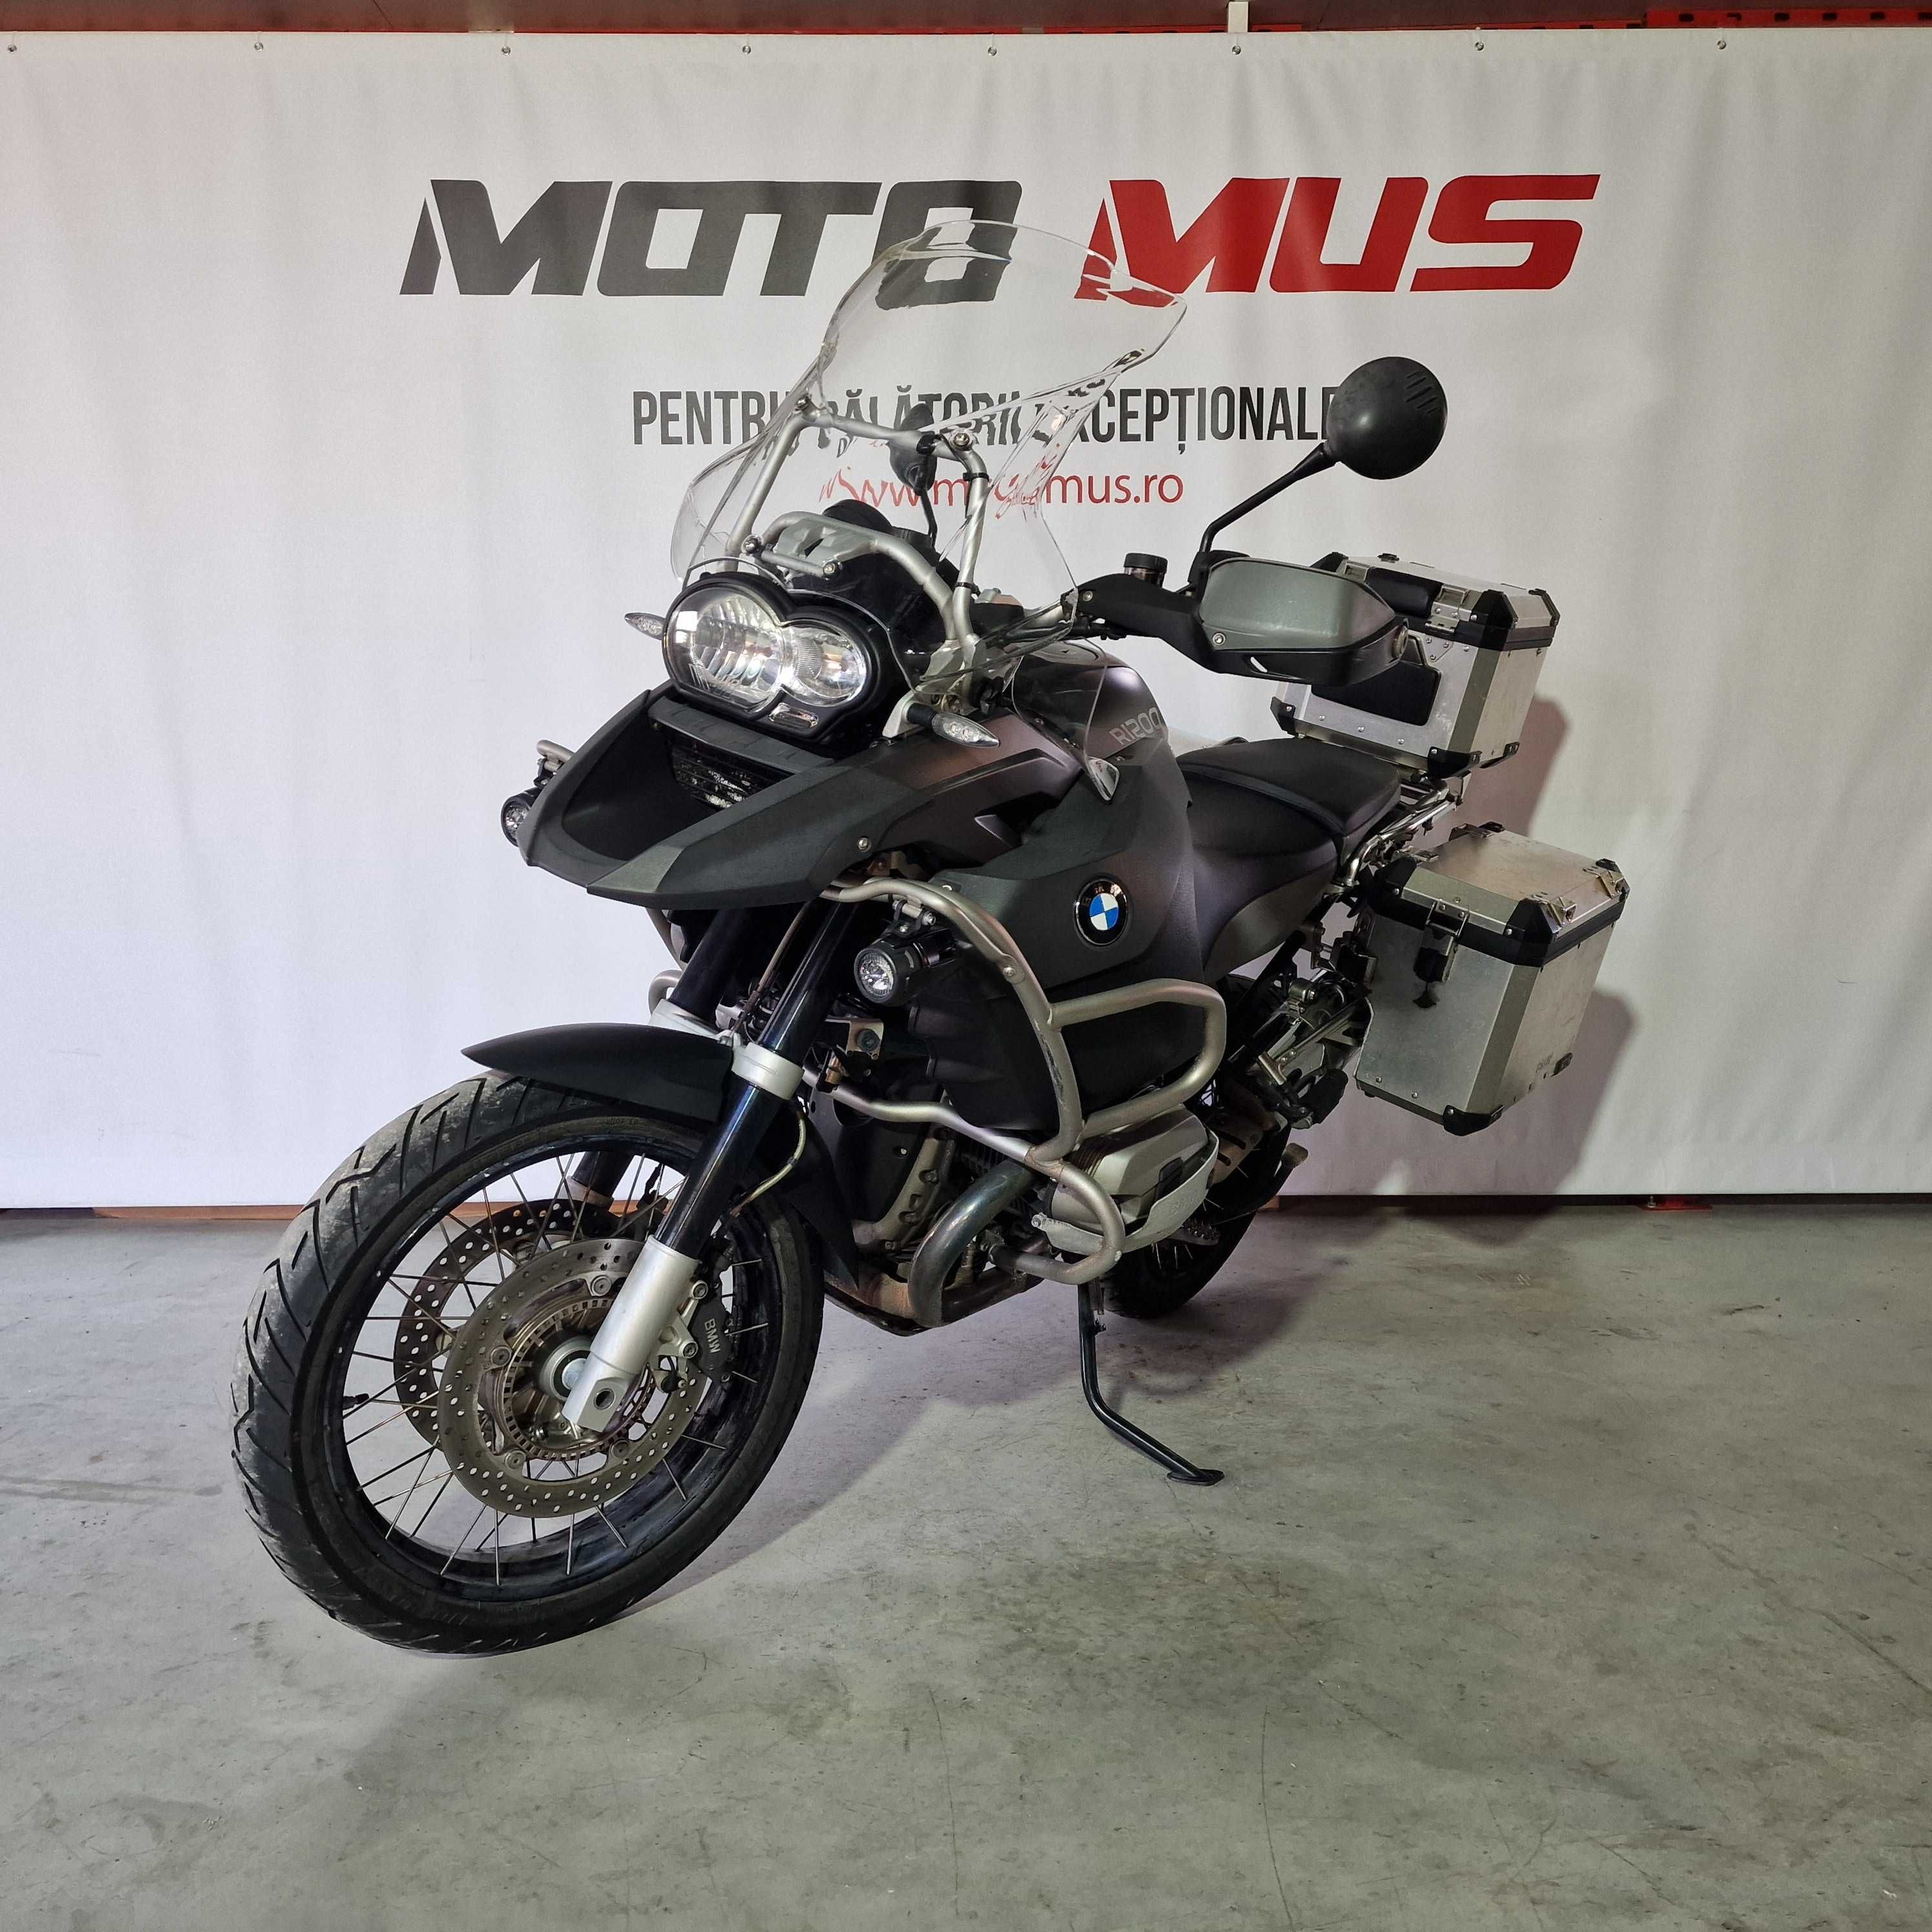 Motocicleta BMW R1200GS Adventure ABS | B17821 | motomus.ro